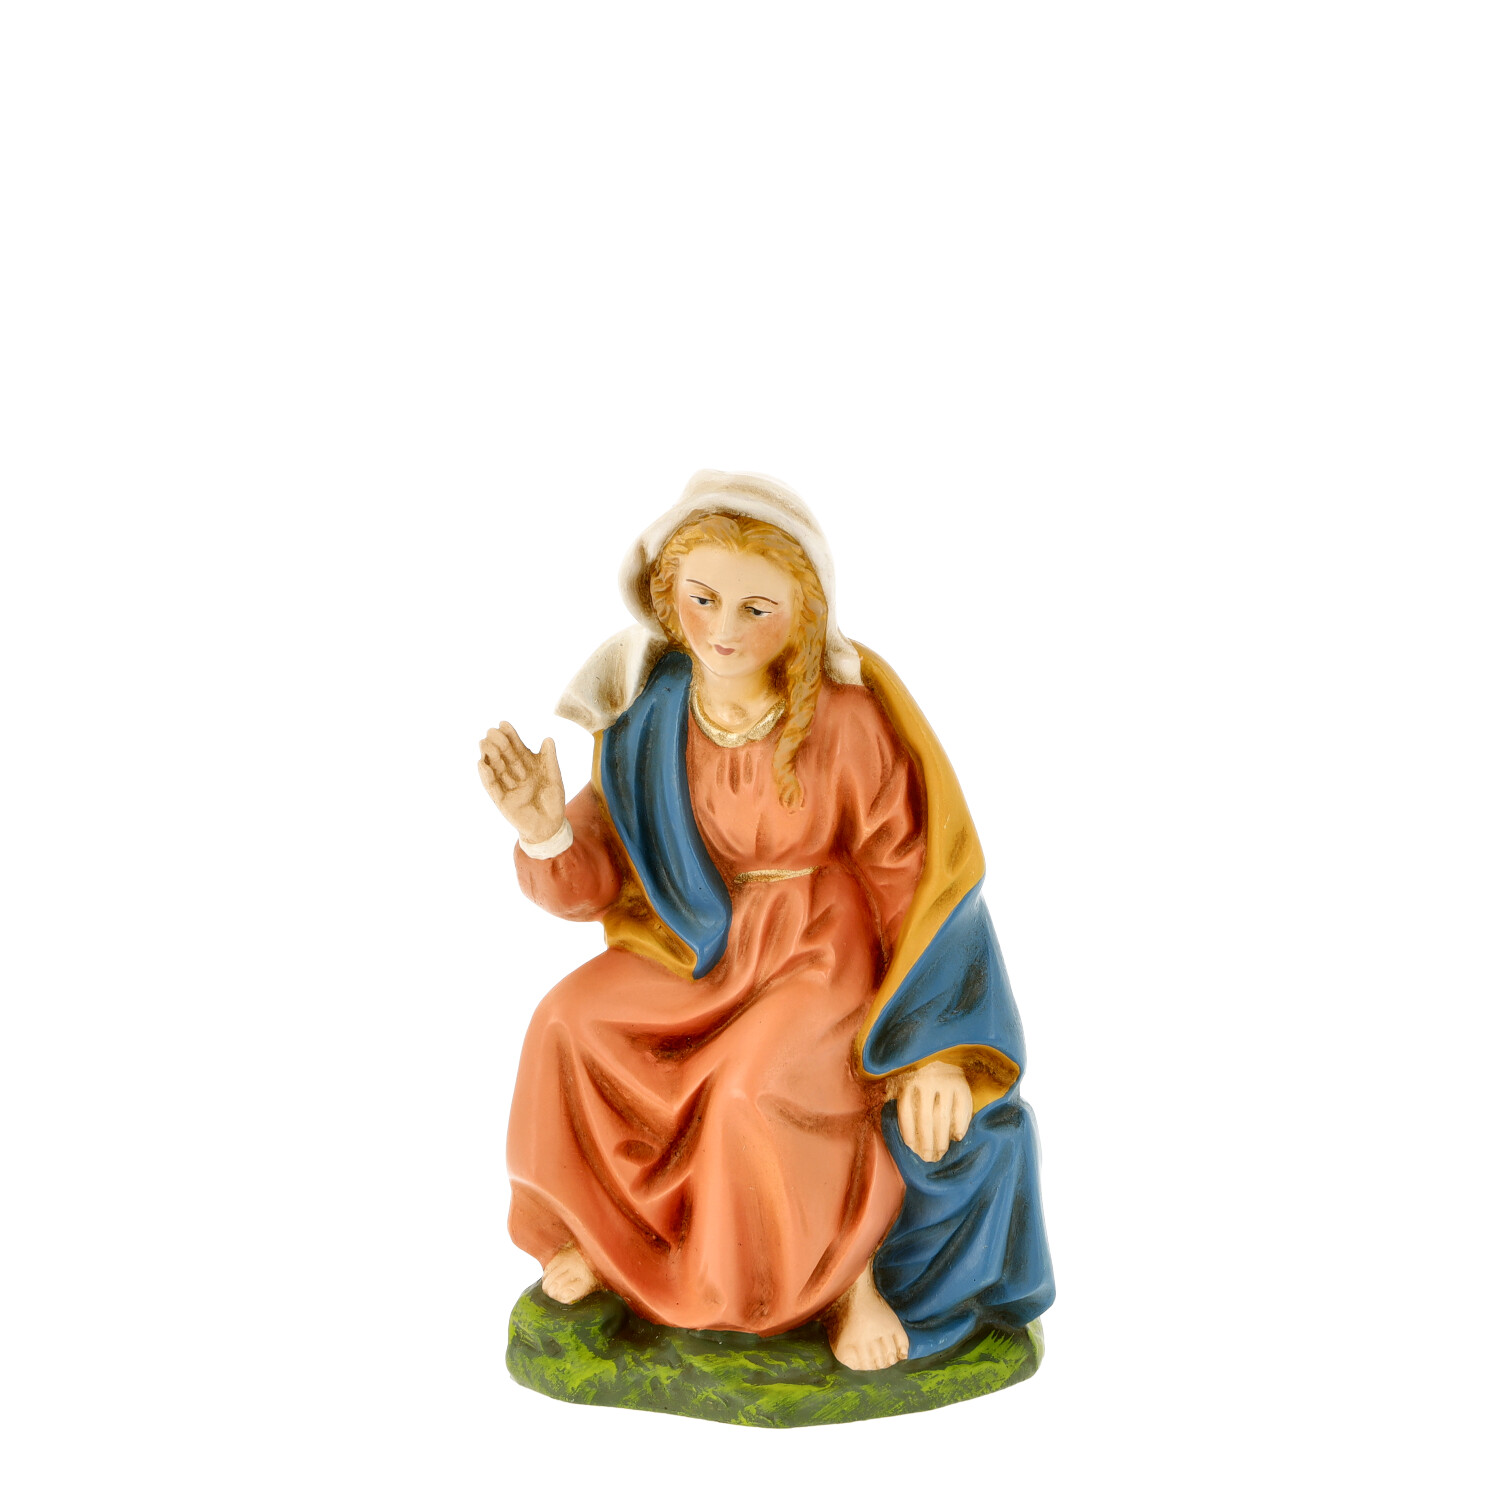 Sitting Mary - Marolin Nativity figure - made in Germany